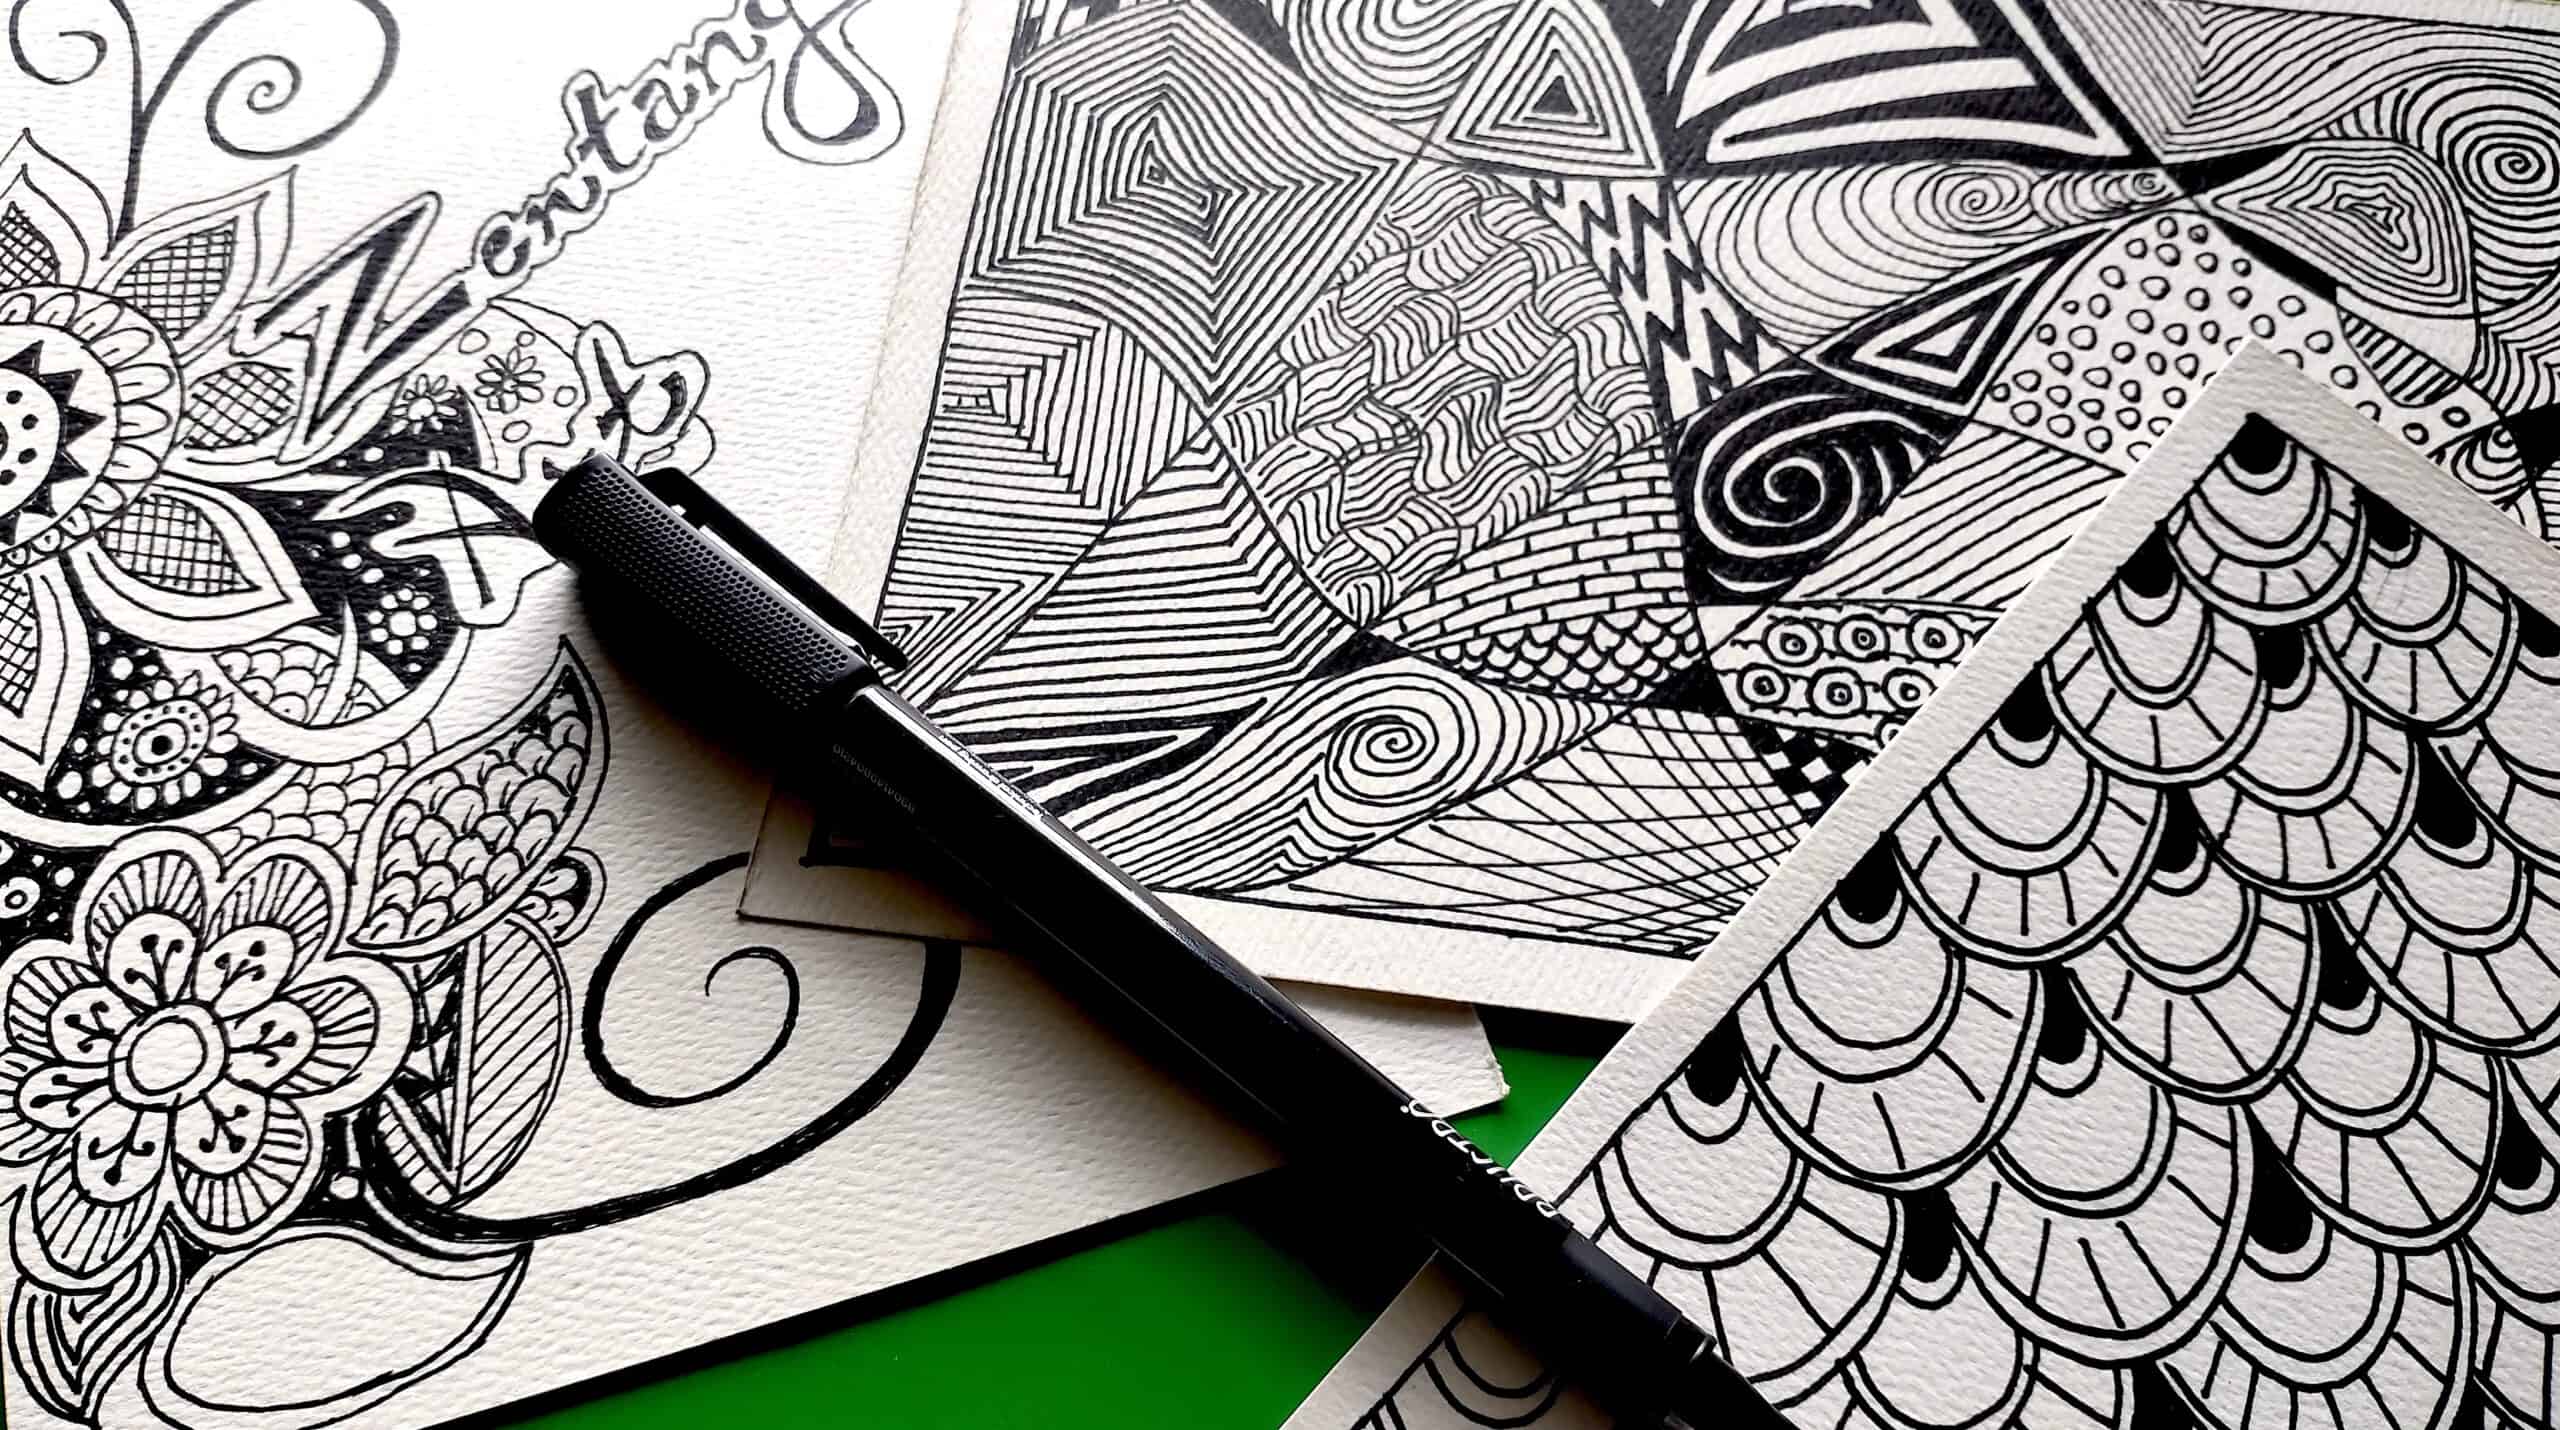 Zentangle - fun with doodling - Carolyn Hasenfratz Design